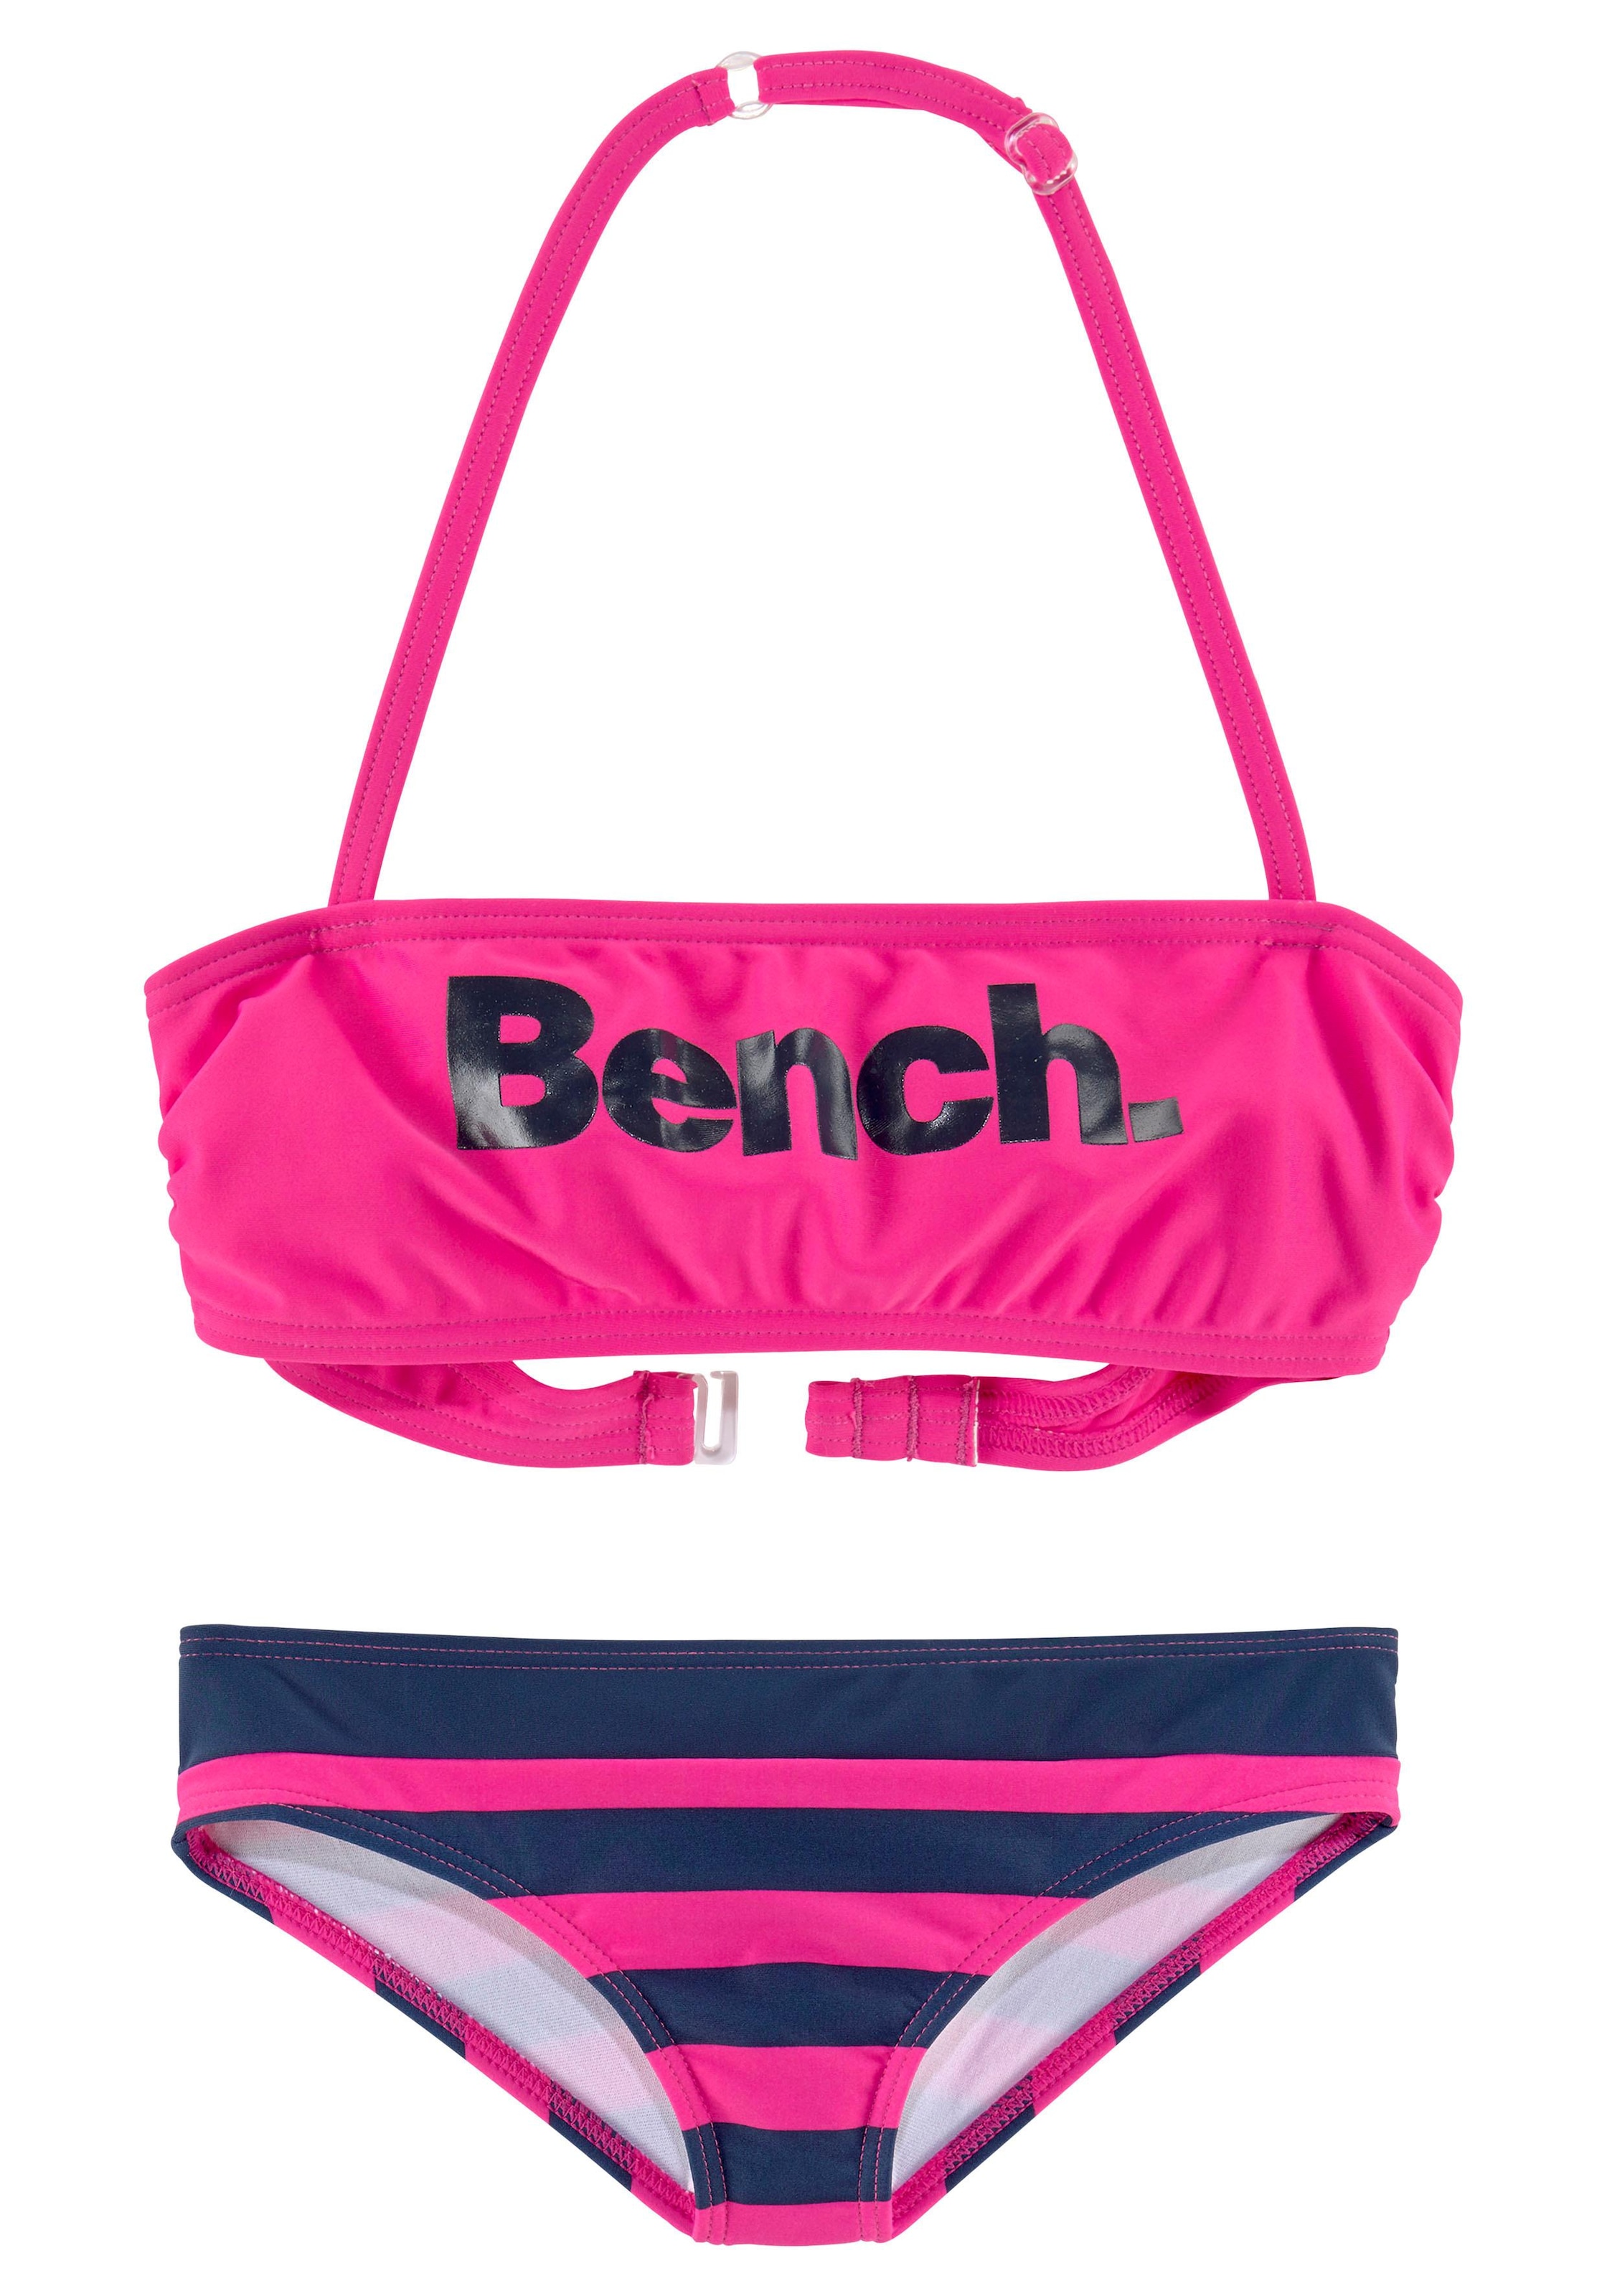 Bench. Bandeau-Bikini großem kaufen mit | BAUR online Logoprint